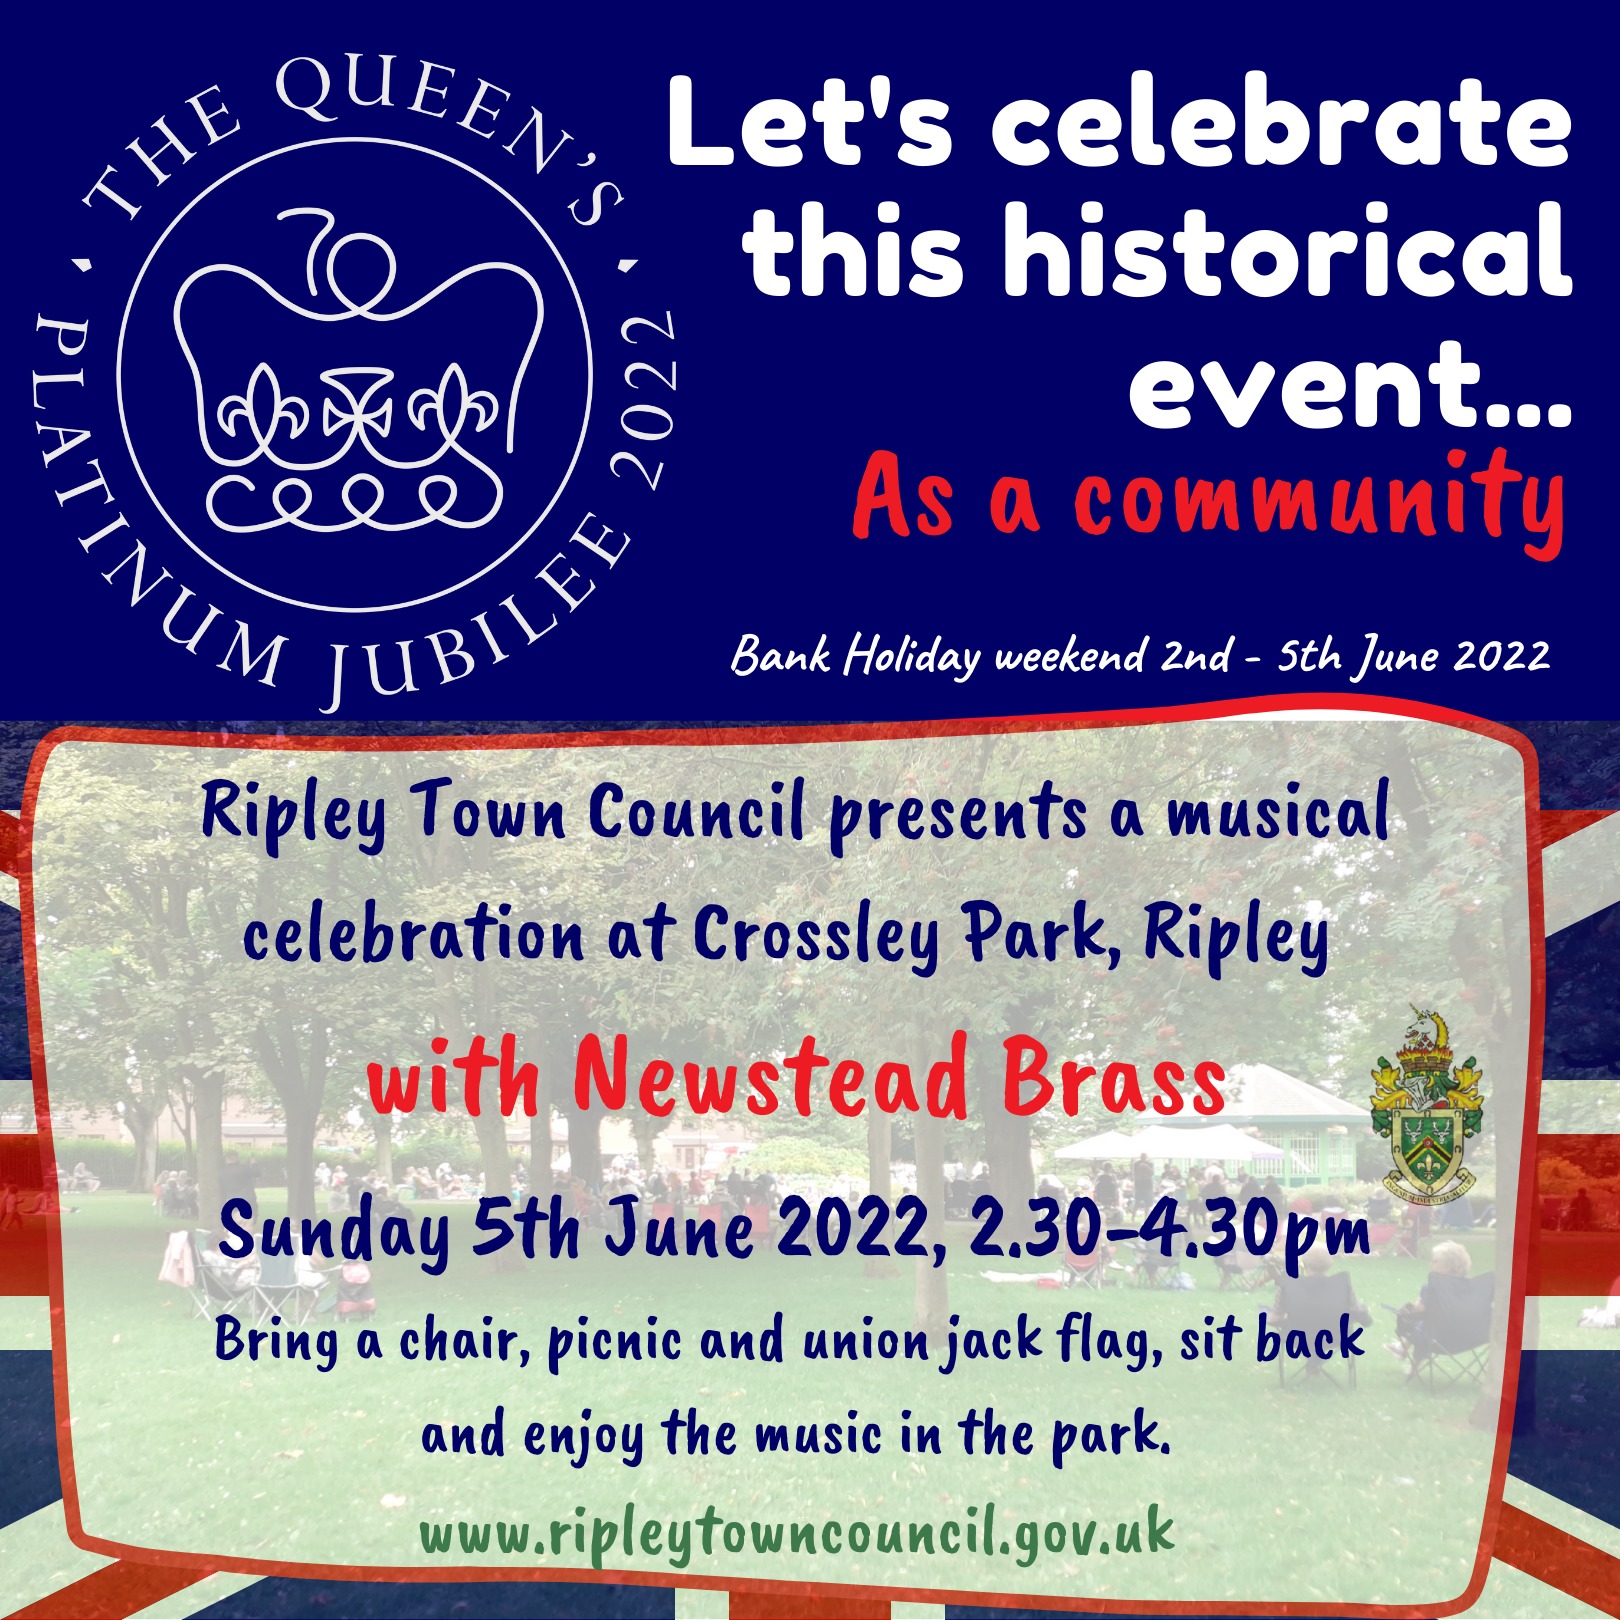 Queen's Jubilee band on Crossley Park information